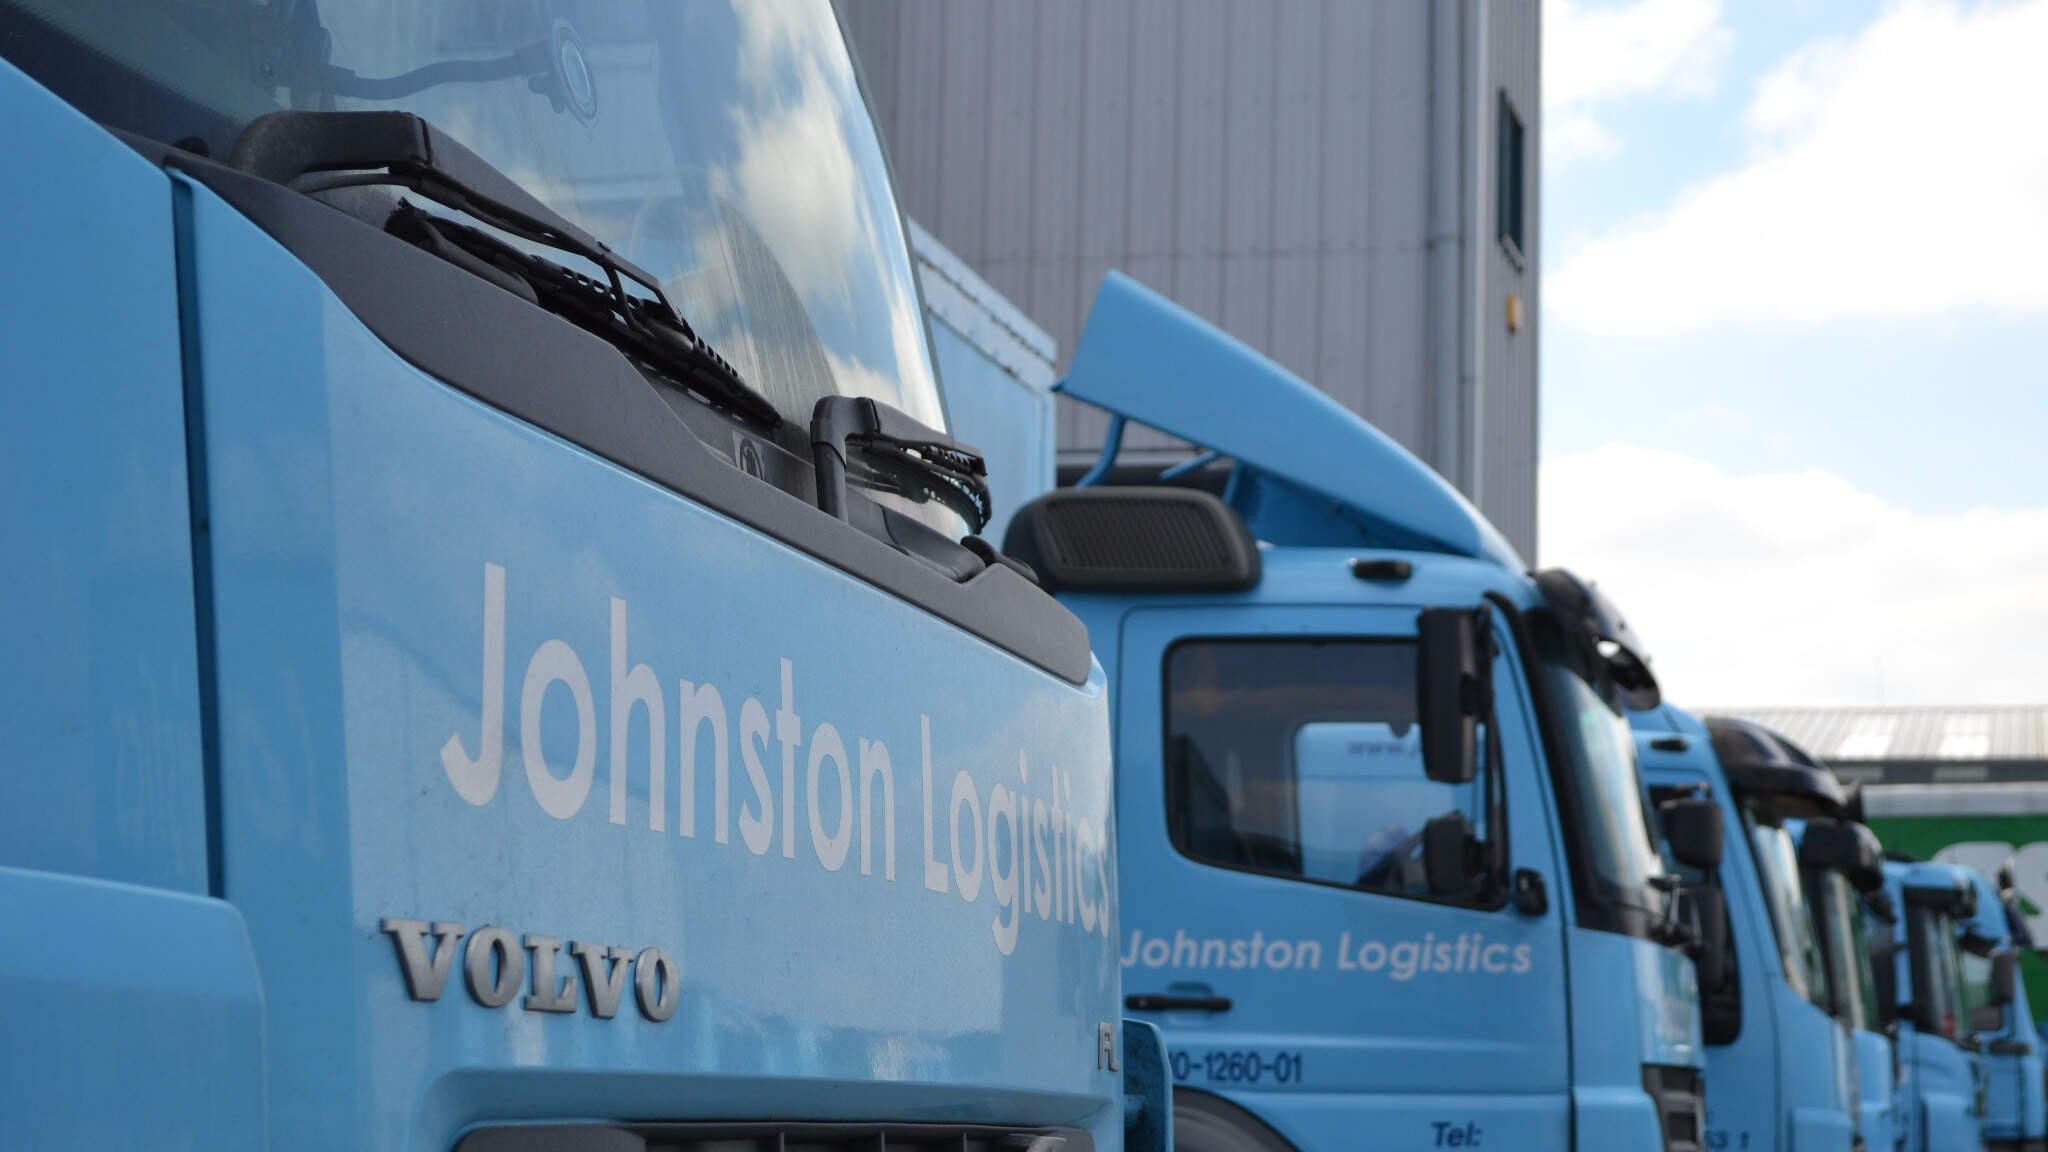  Irish partner, Johnston Logistics